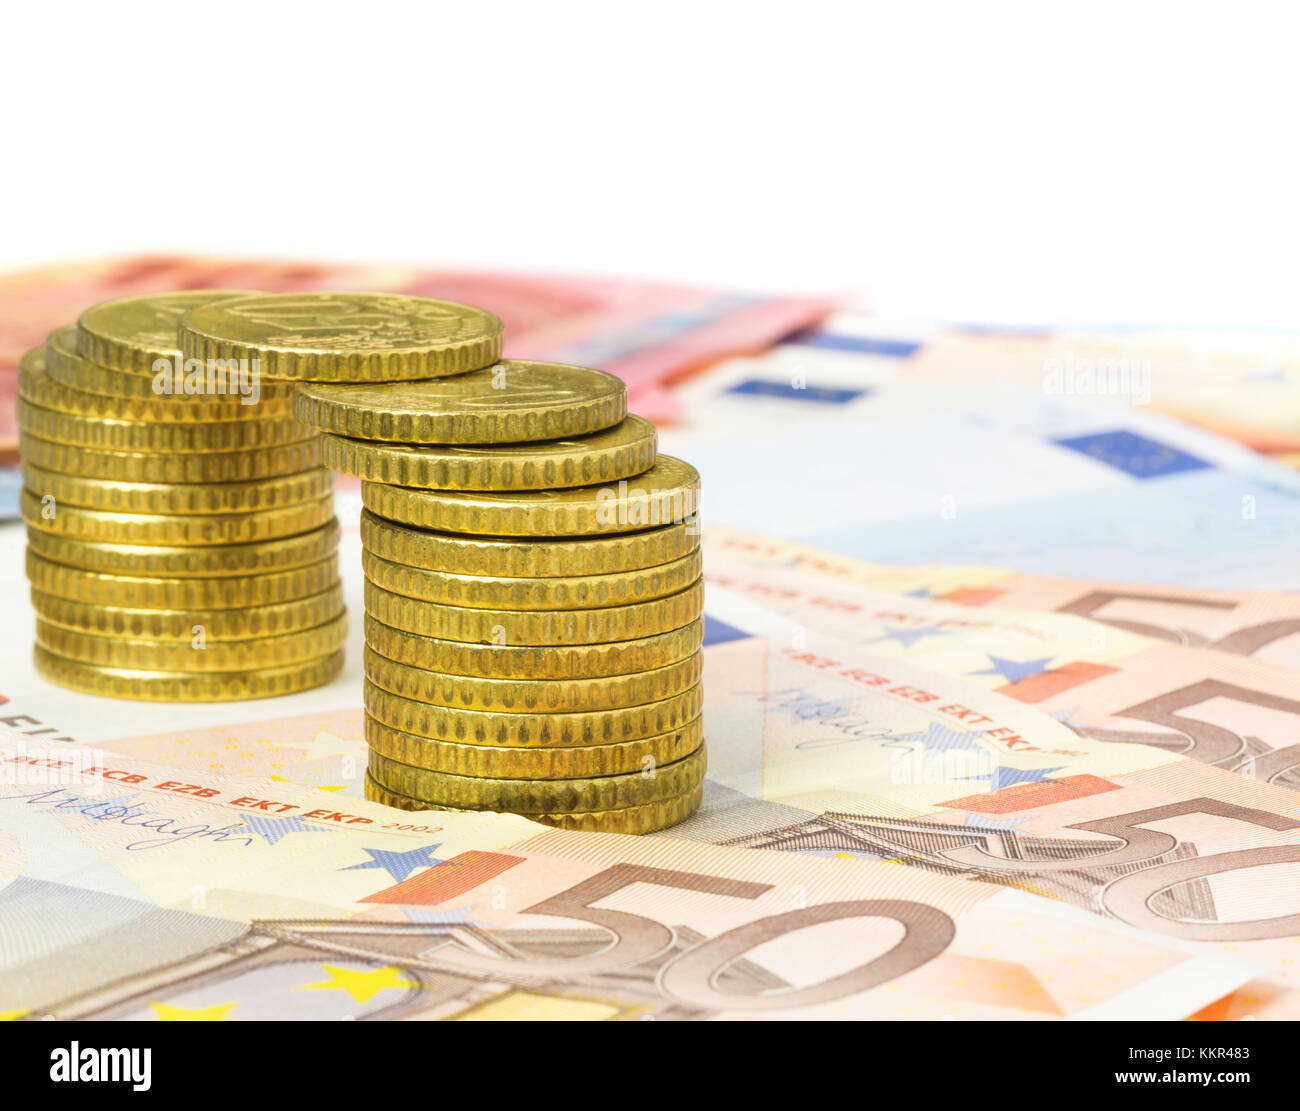 Coins and banknotes, saving money Stock Photo